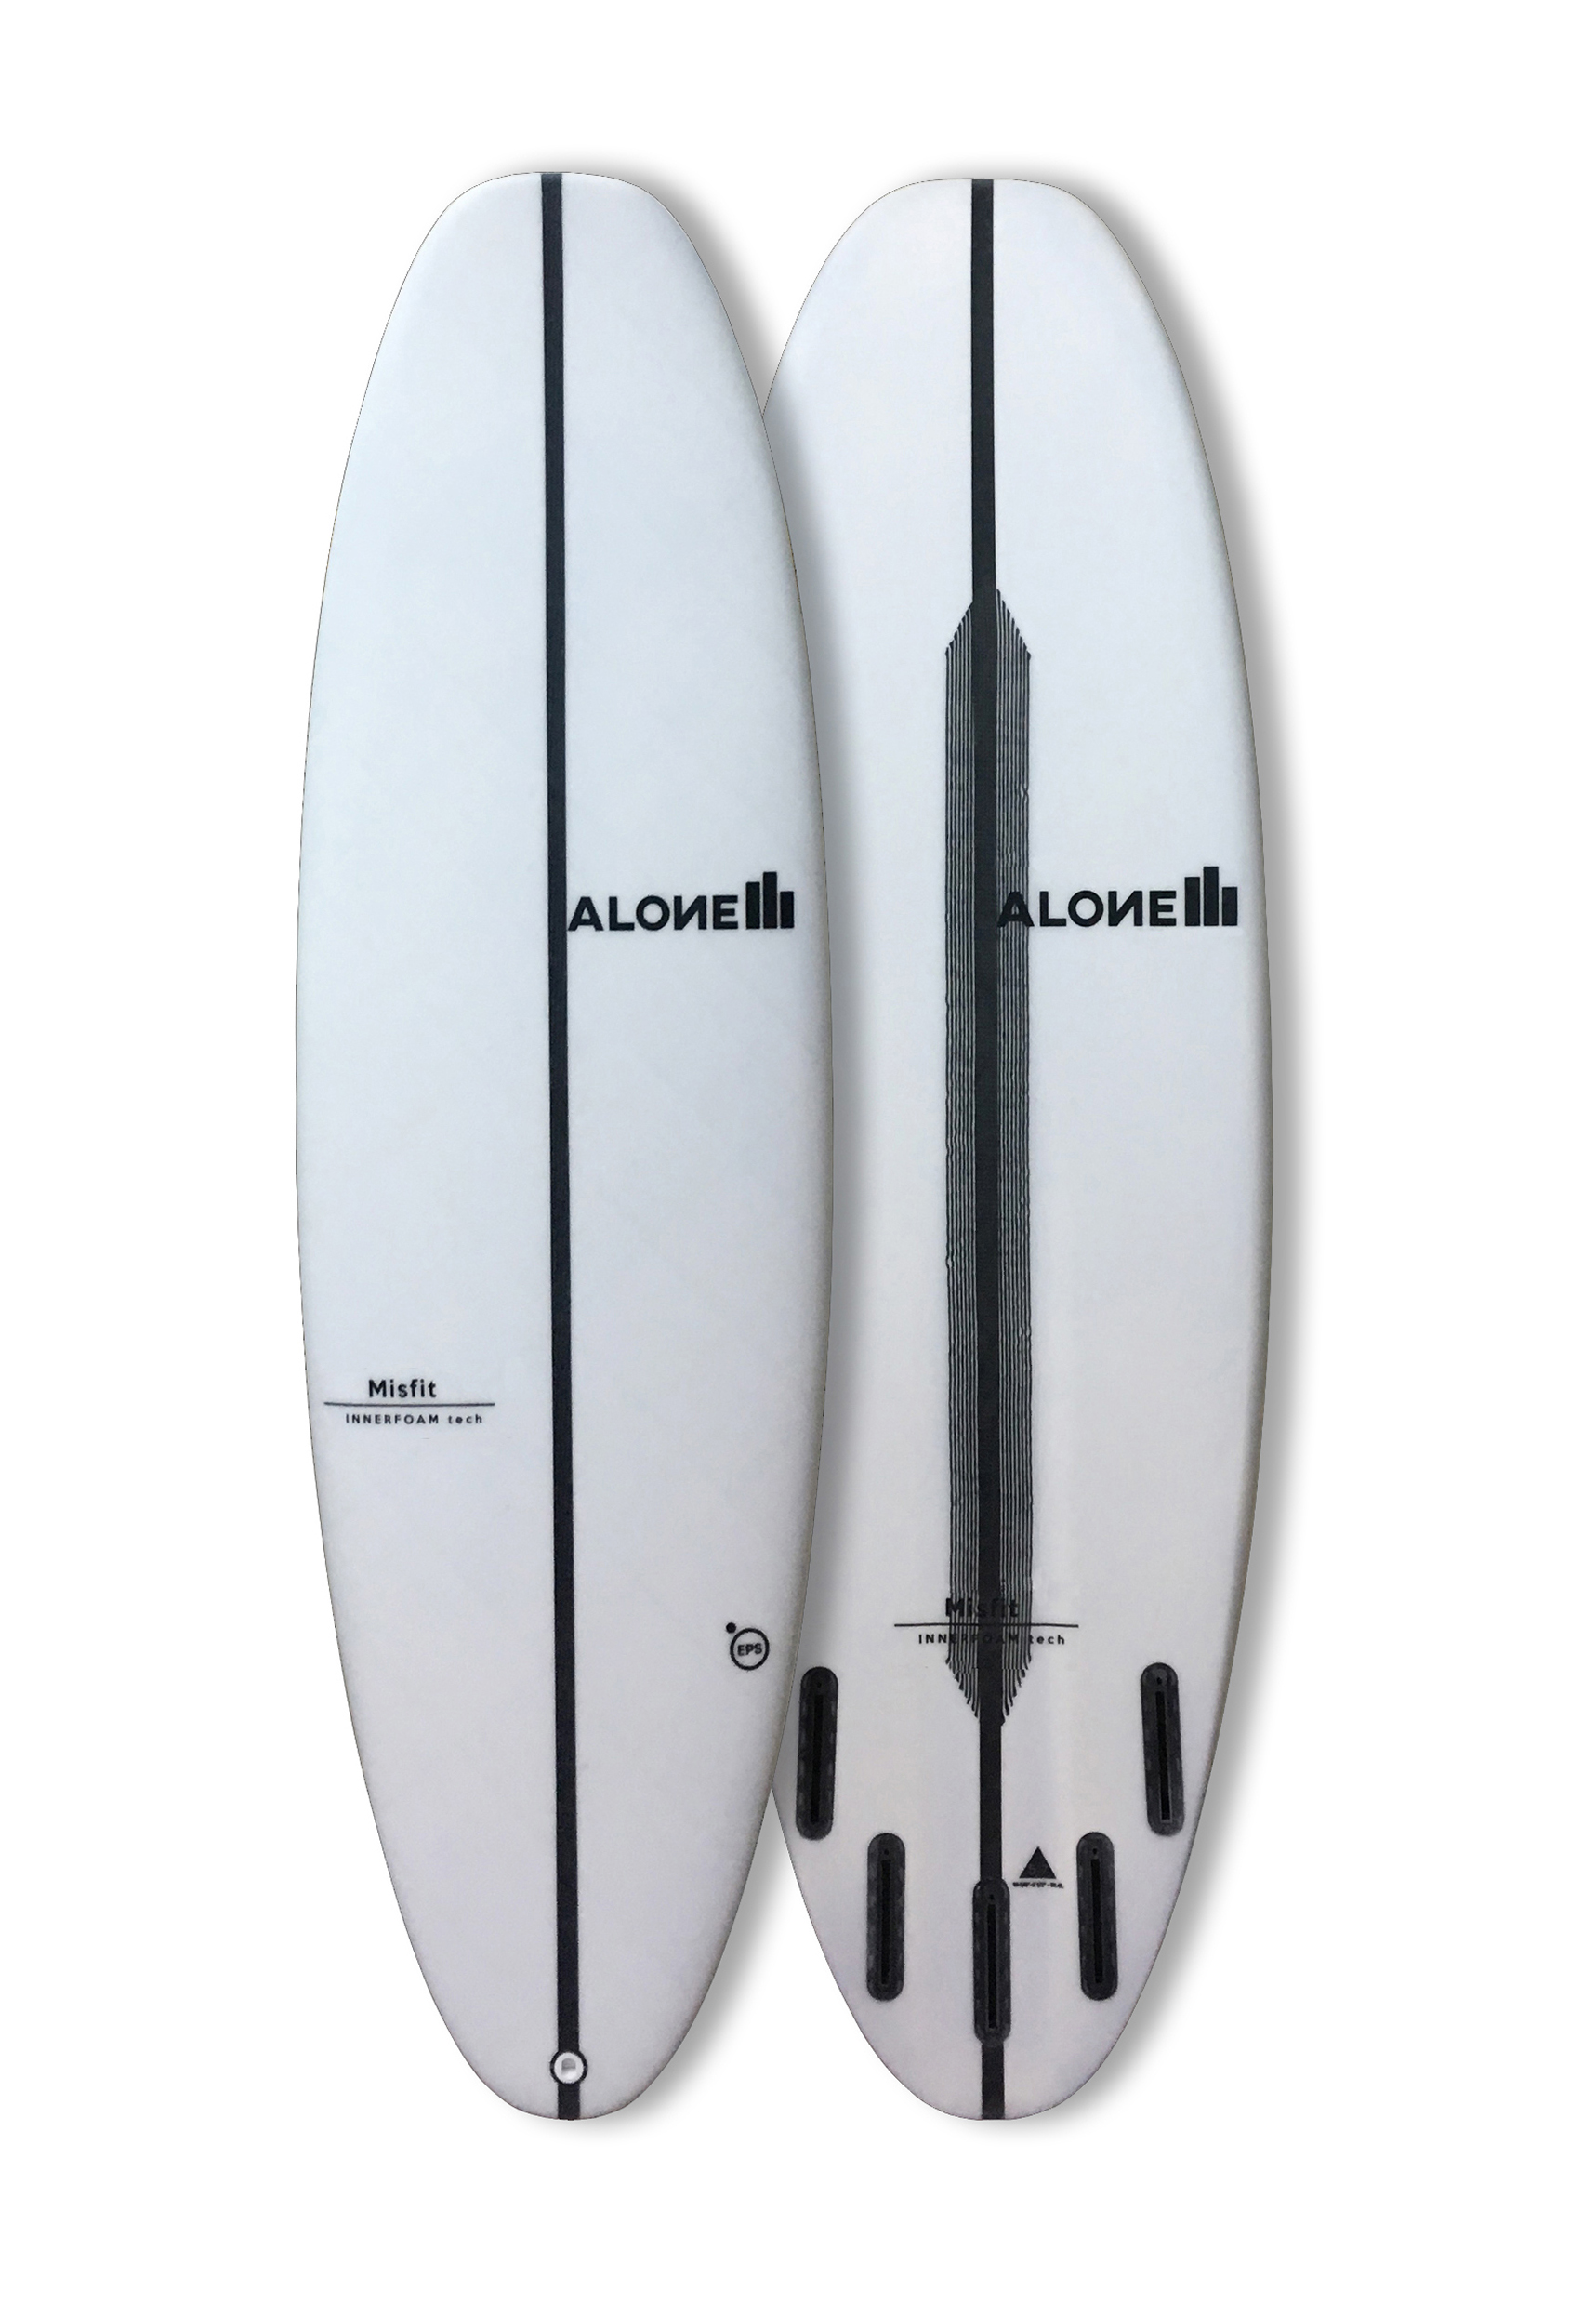 misfit - Alone Surfboards